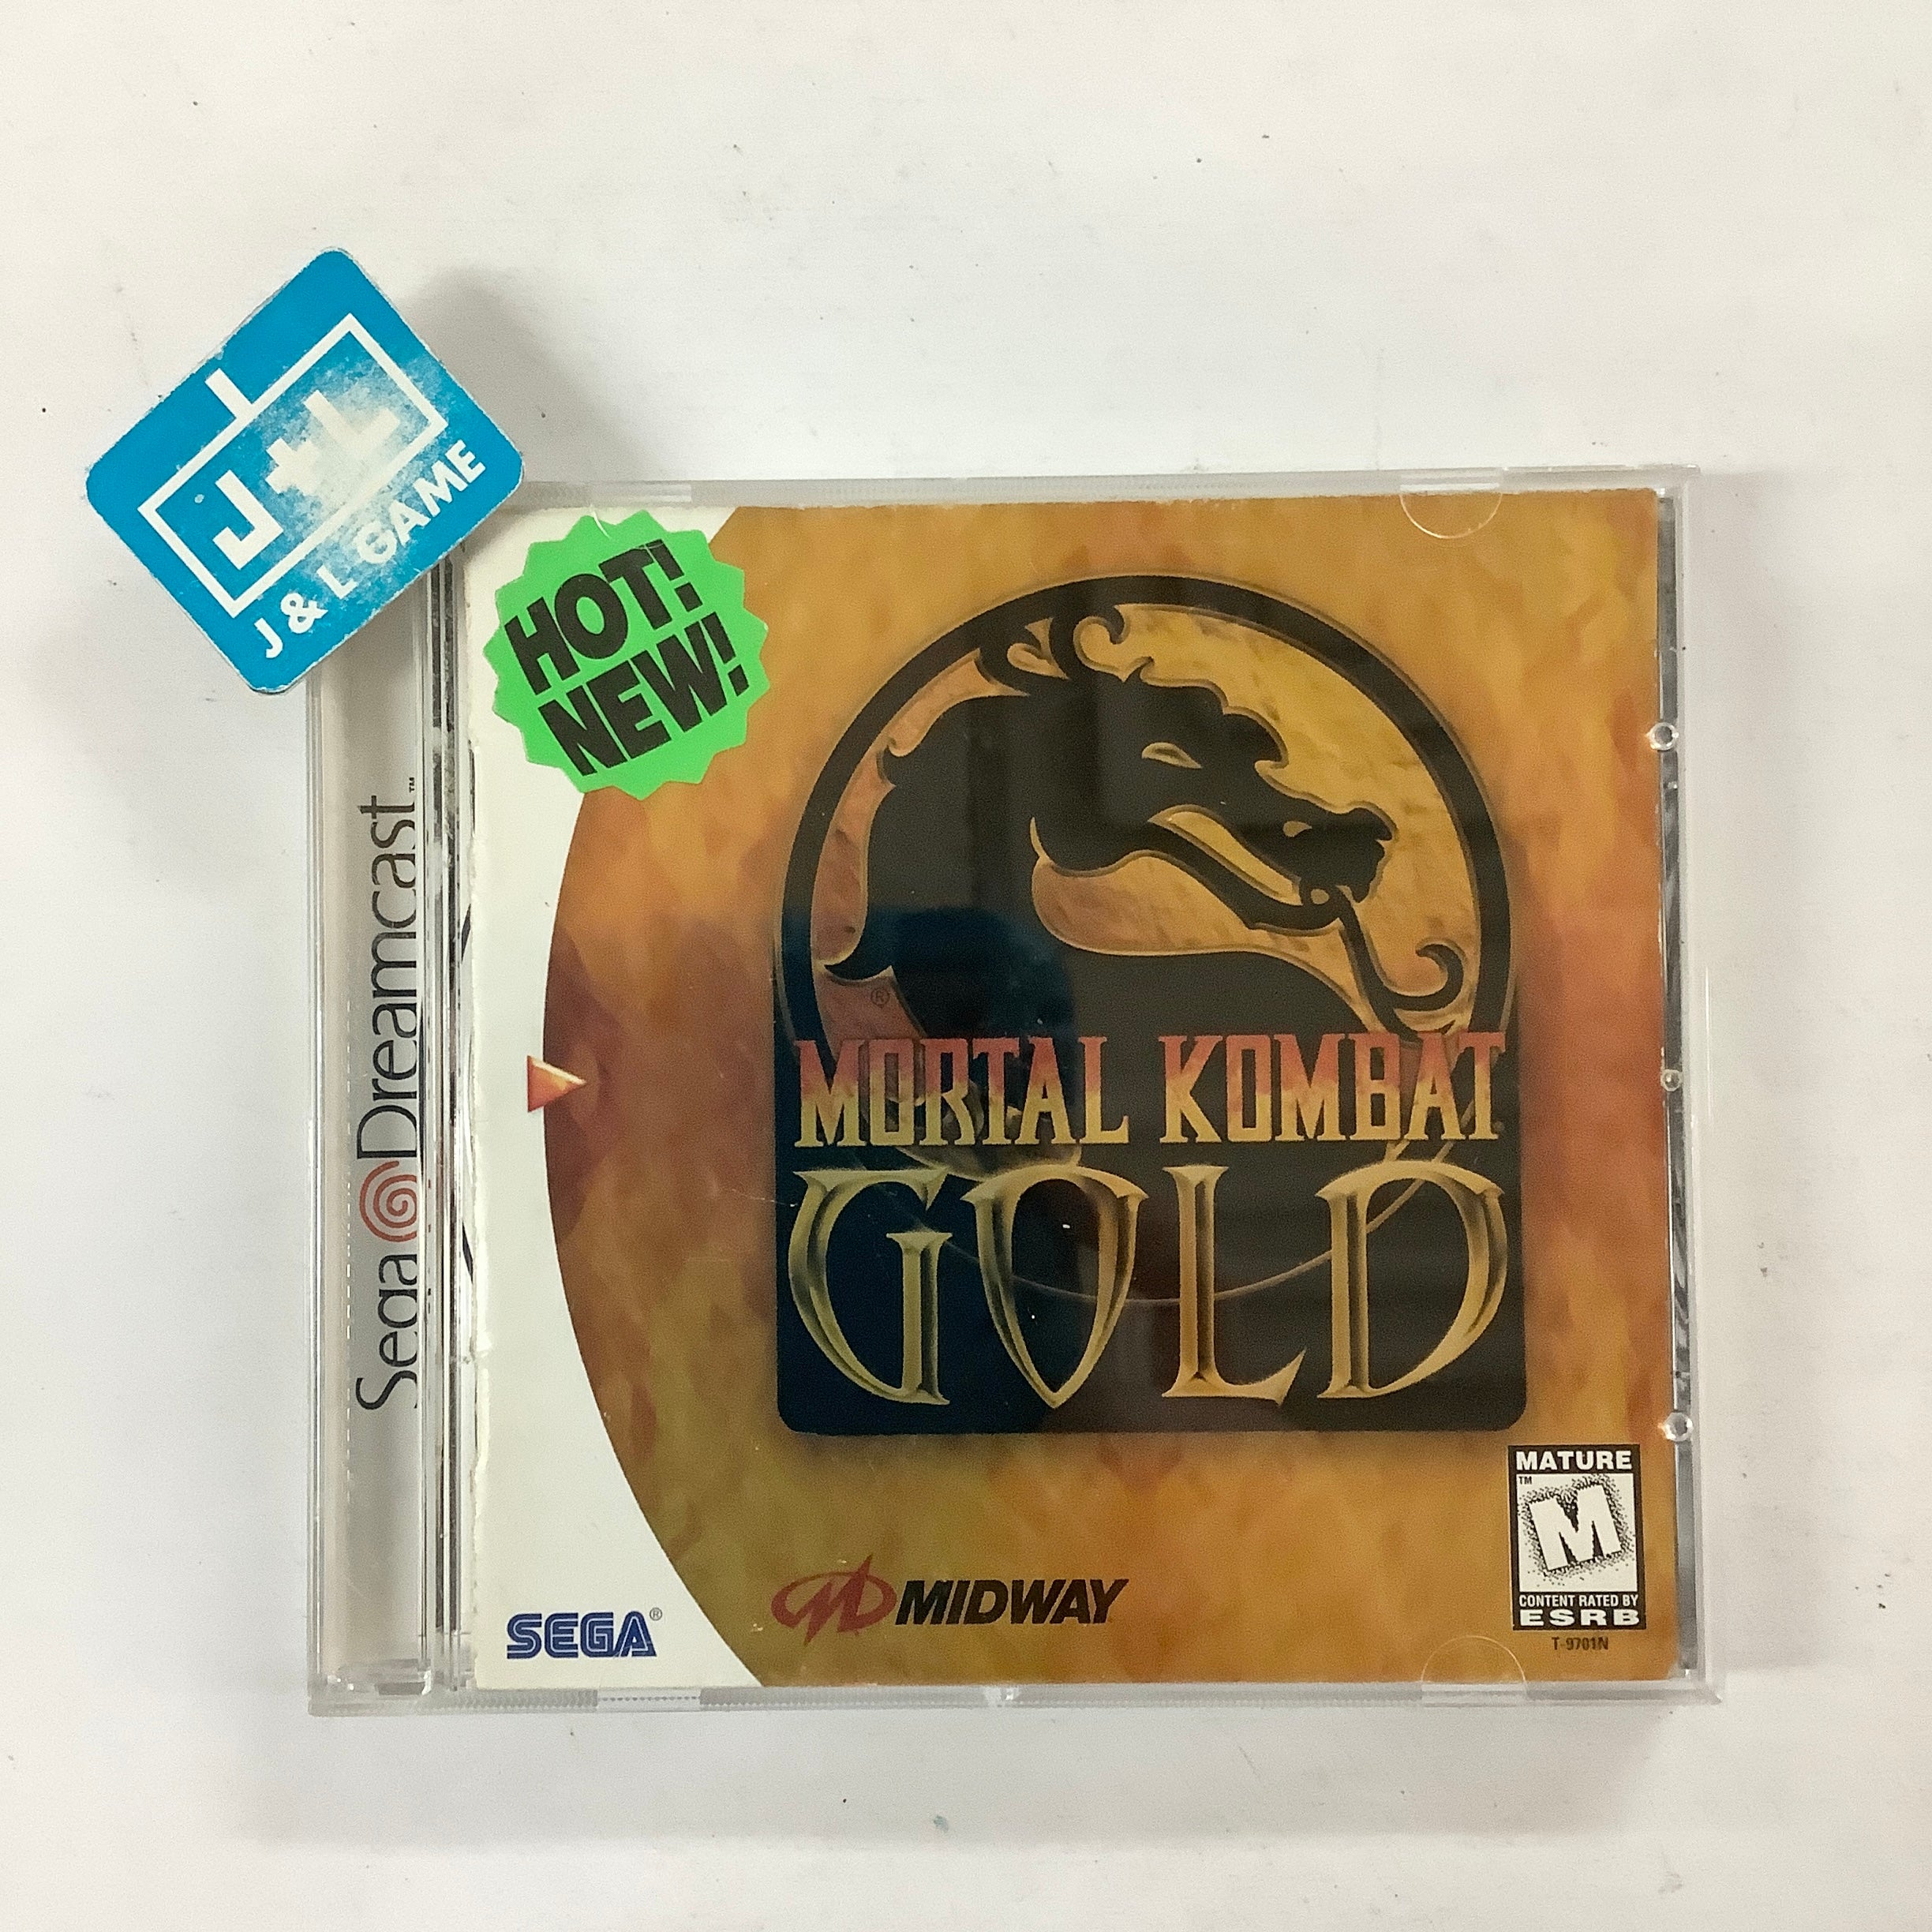 Mortal Kombat Gold - (DC) SEGA Dreamcast  [Pre-Owned] Video Games Midway   